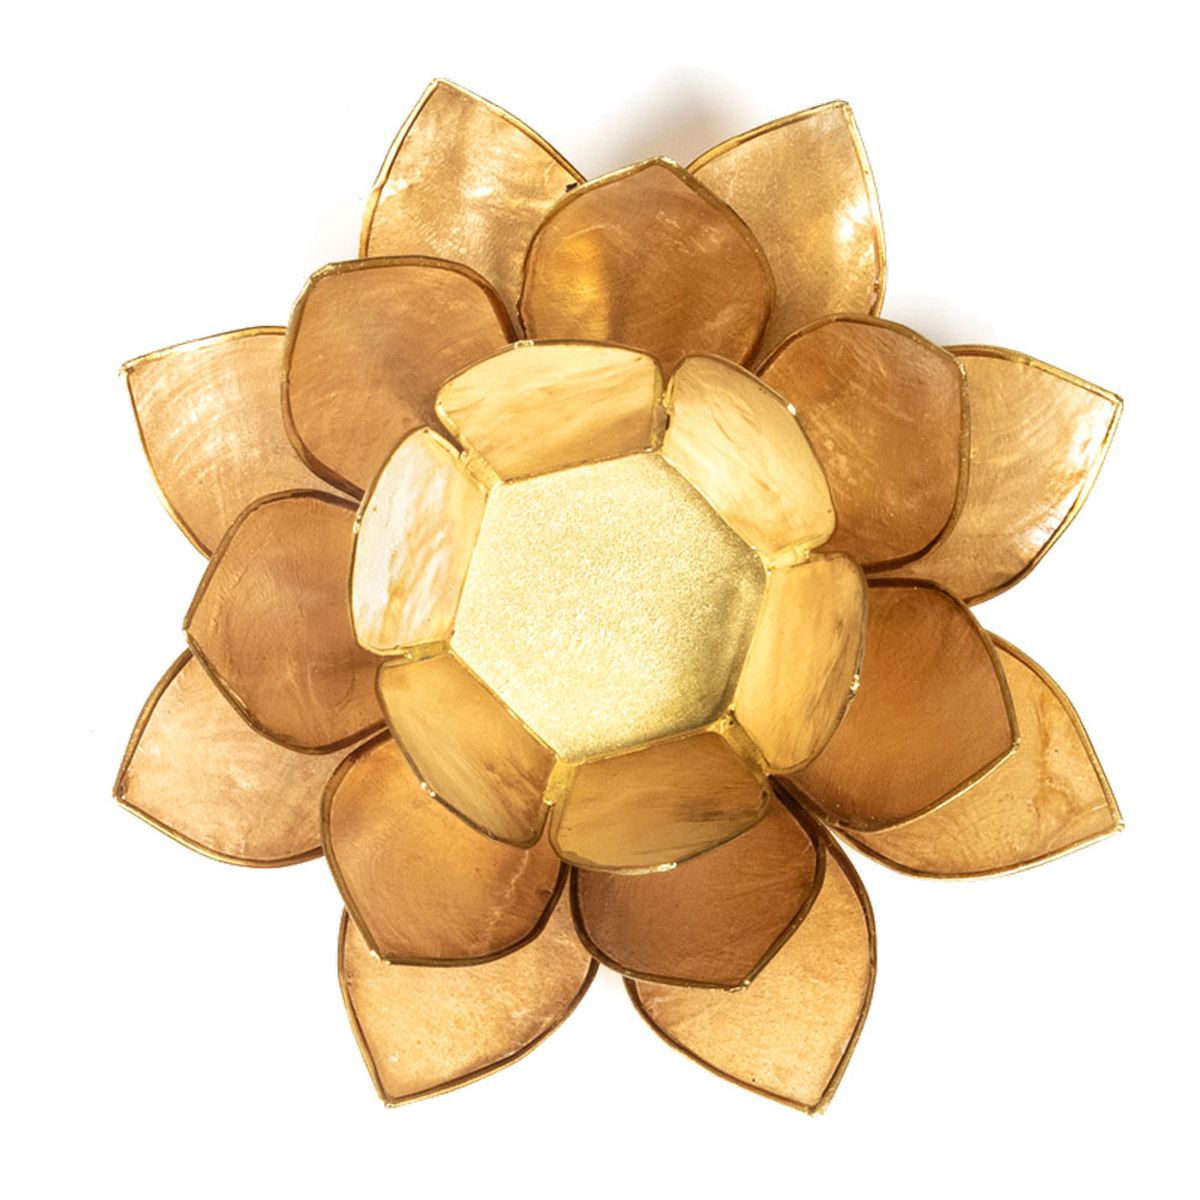 Lotus candleholder light Gold